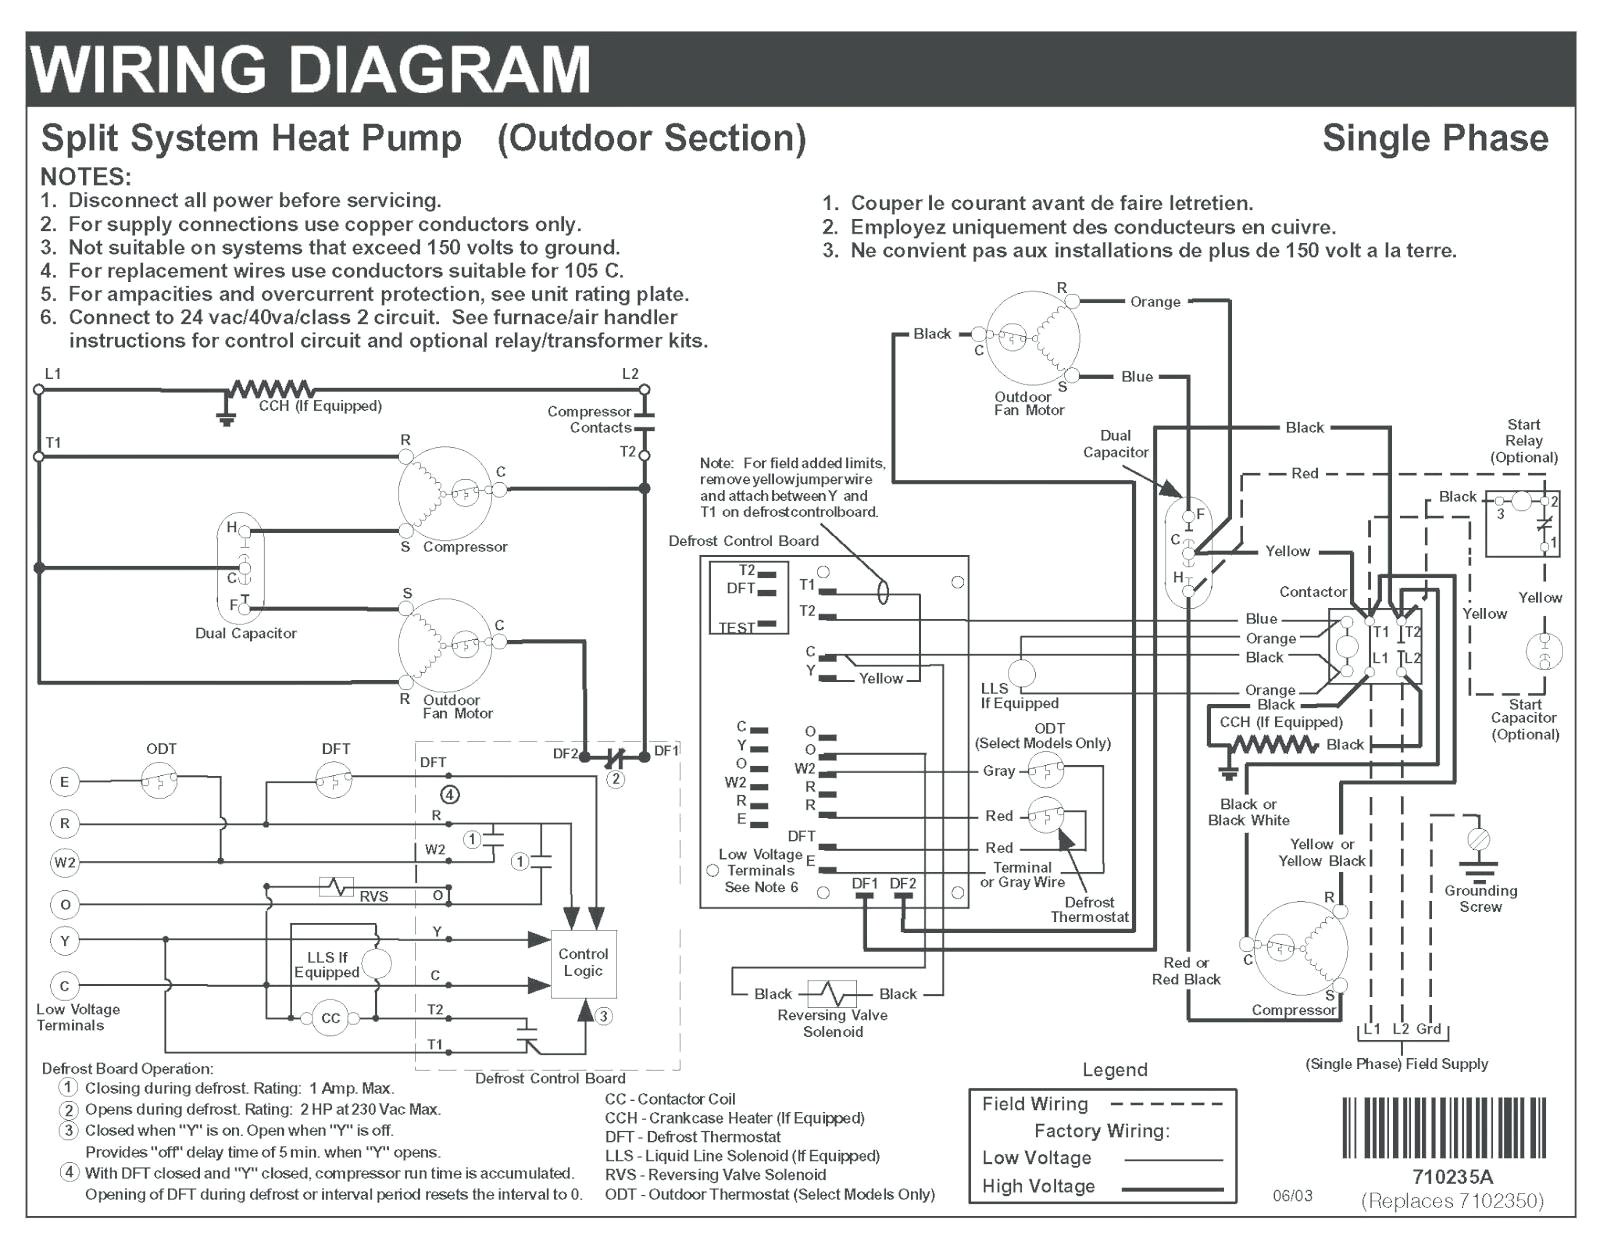 pioneer avic x930bt wiring diagram inspiration pioneer avic x930bt wiring diagram 3 way switch pilot light